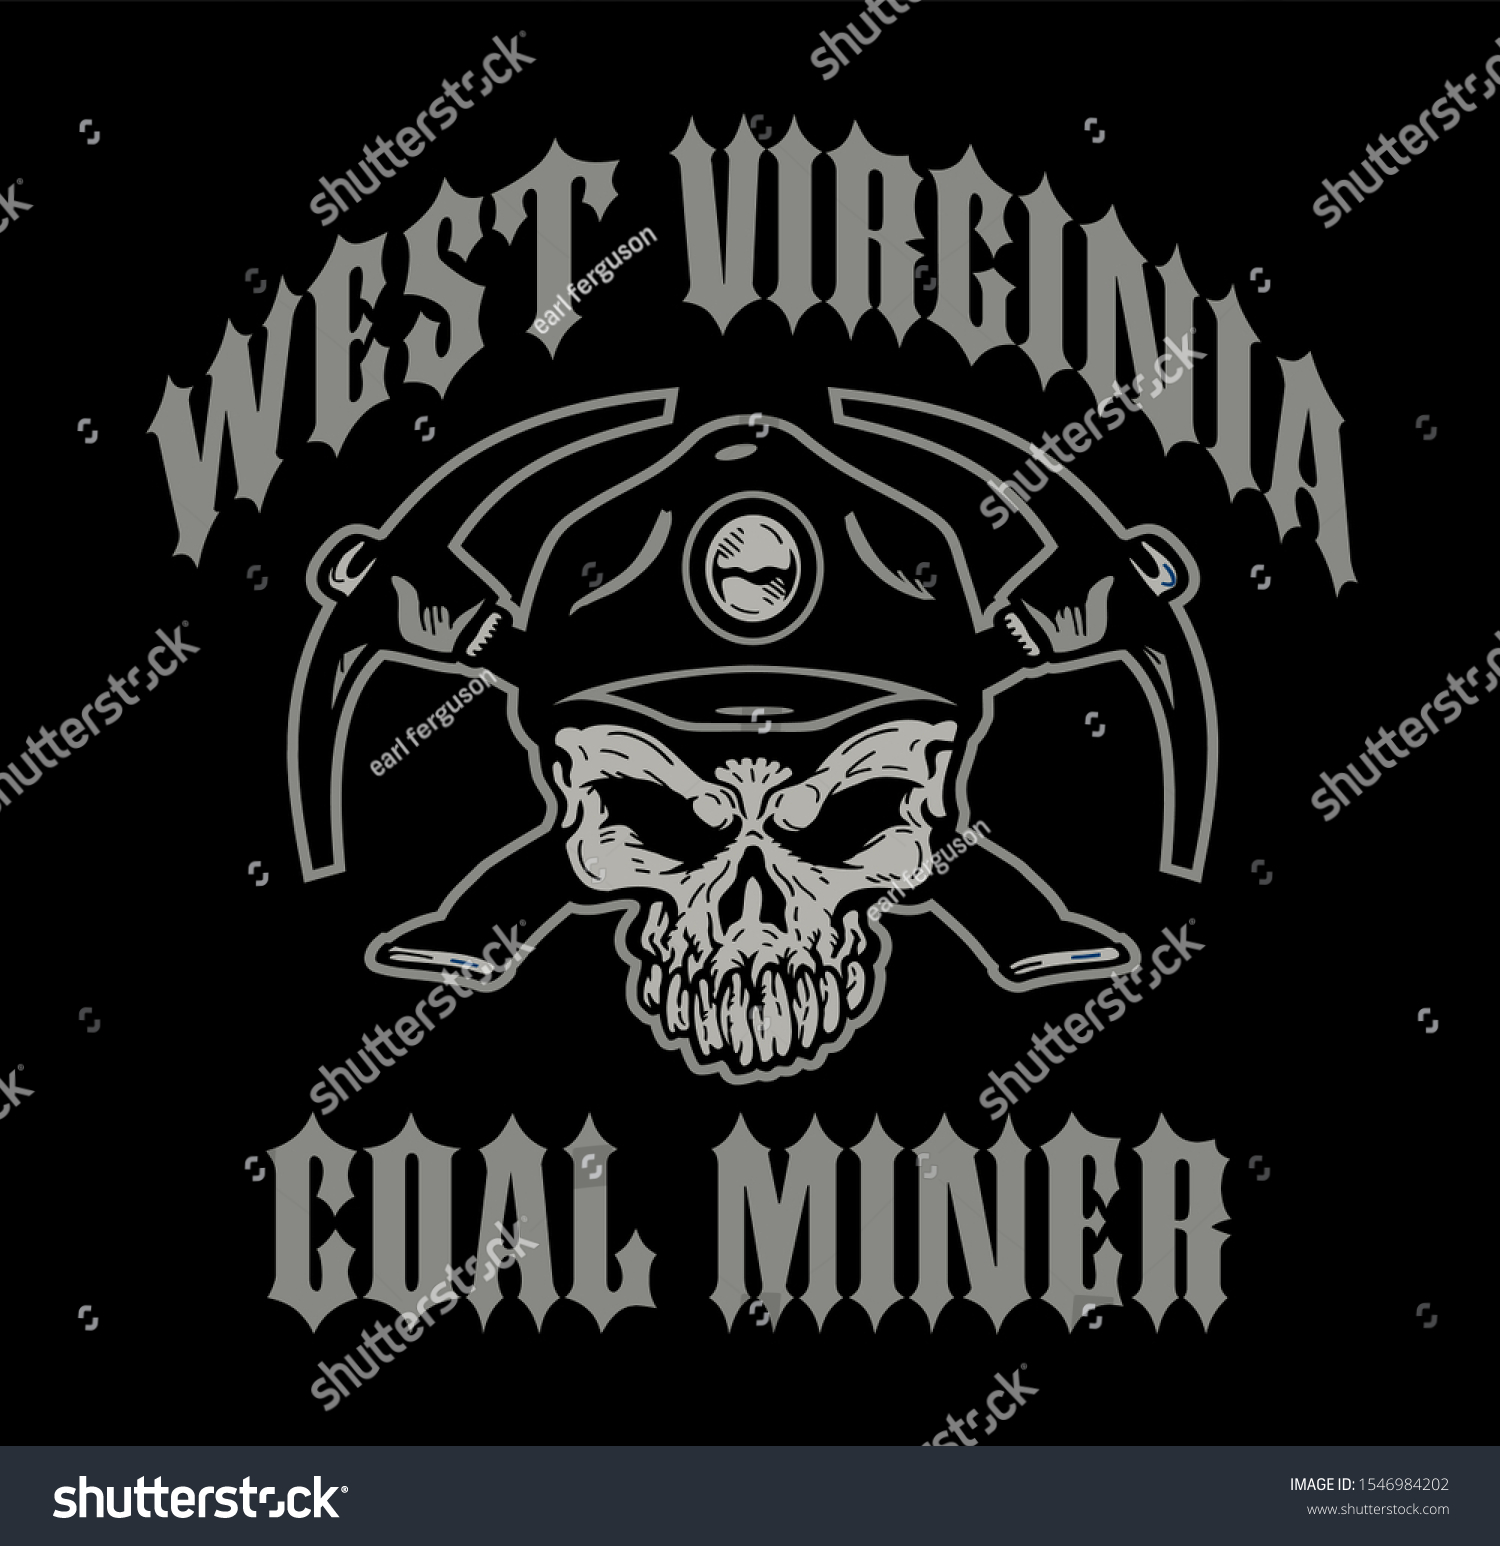 3 Coal Miner Skull Mining Tool Box Hard Hat Helmet Sticker Underground WV H400 